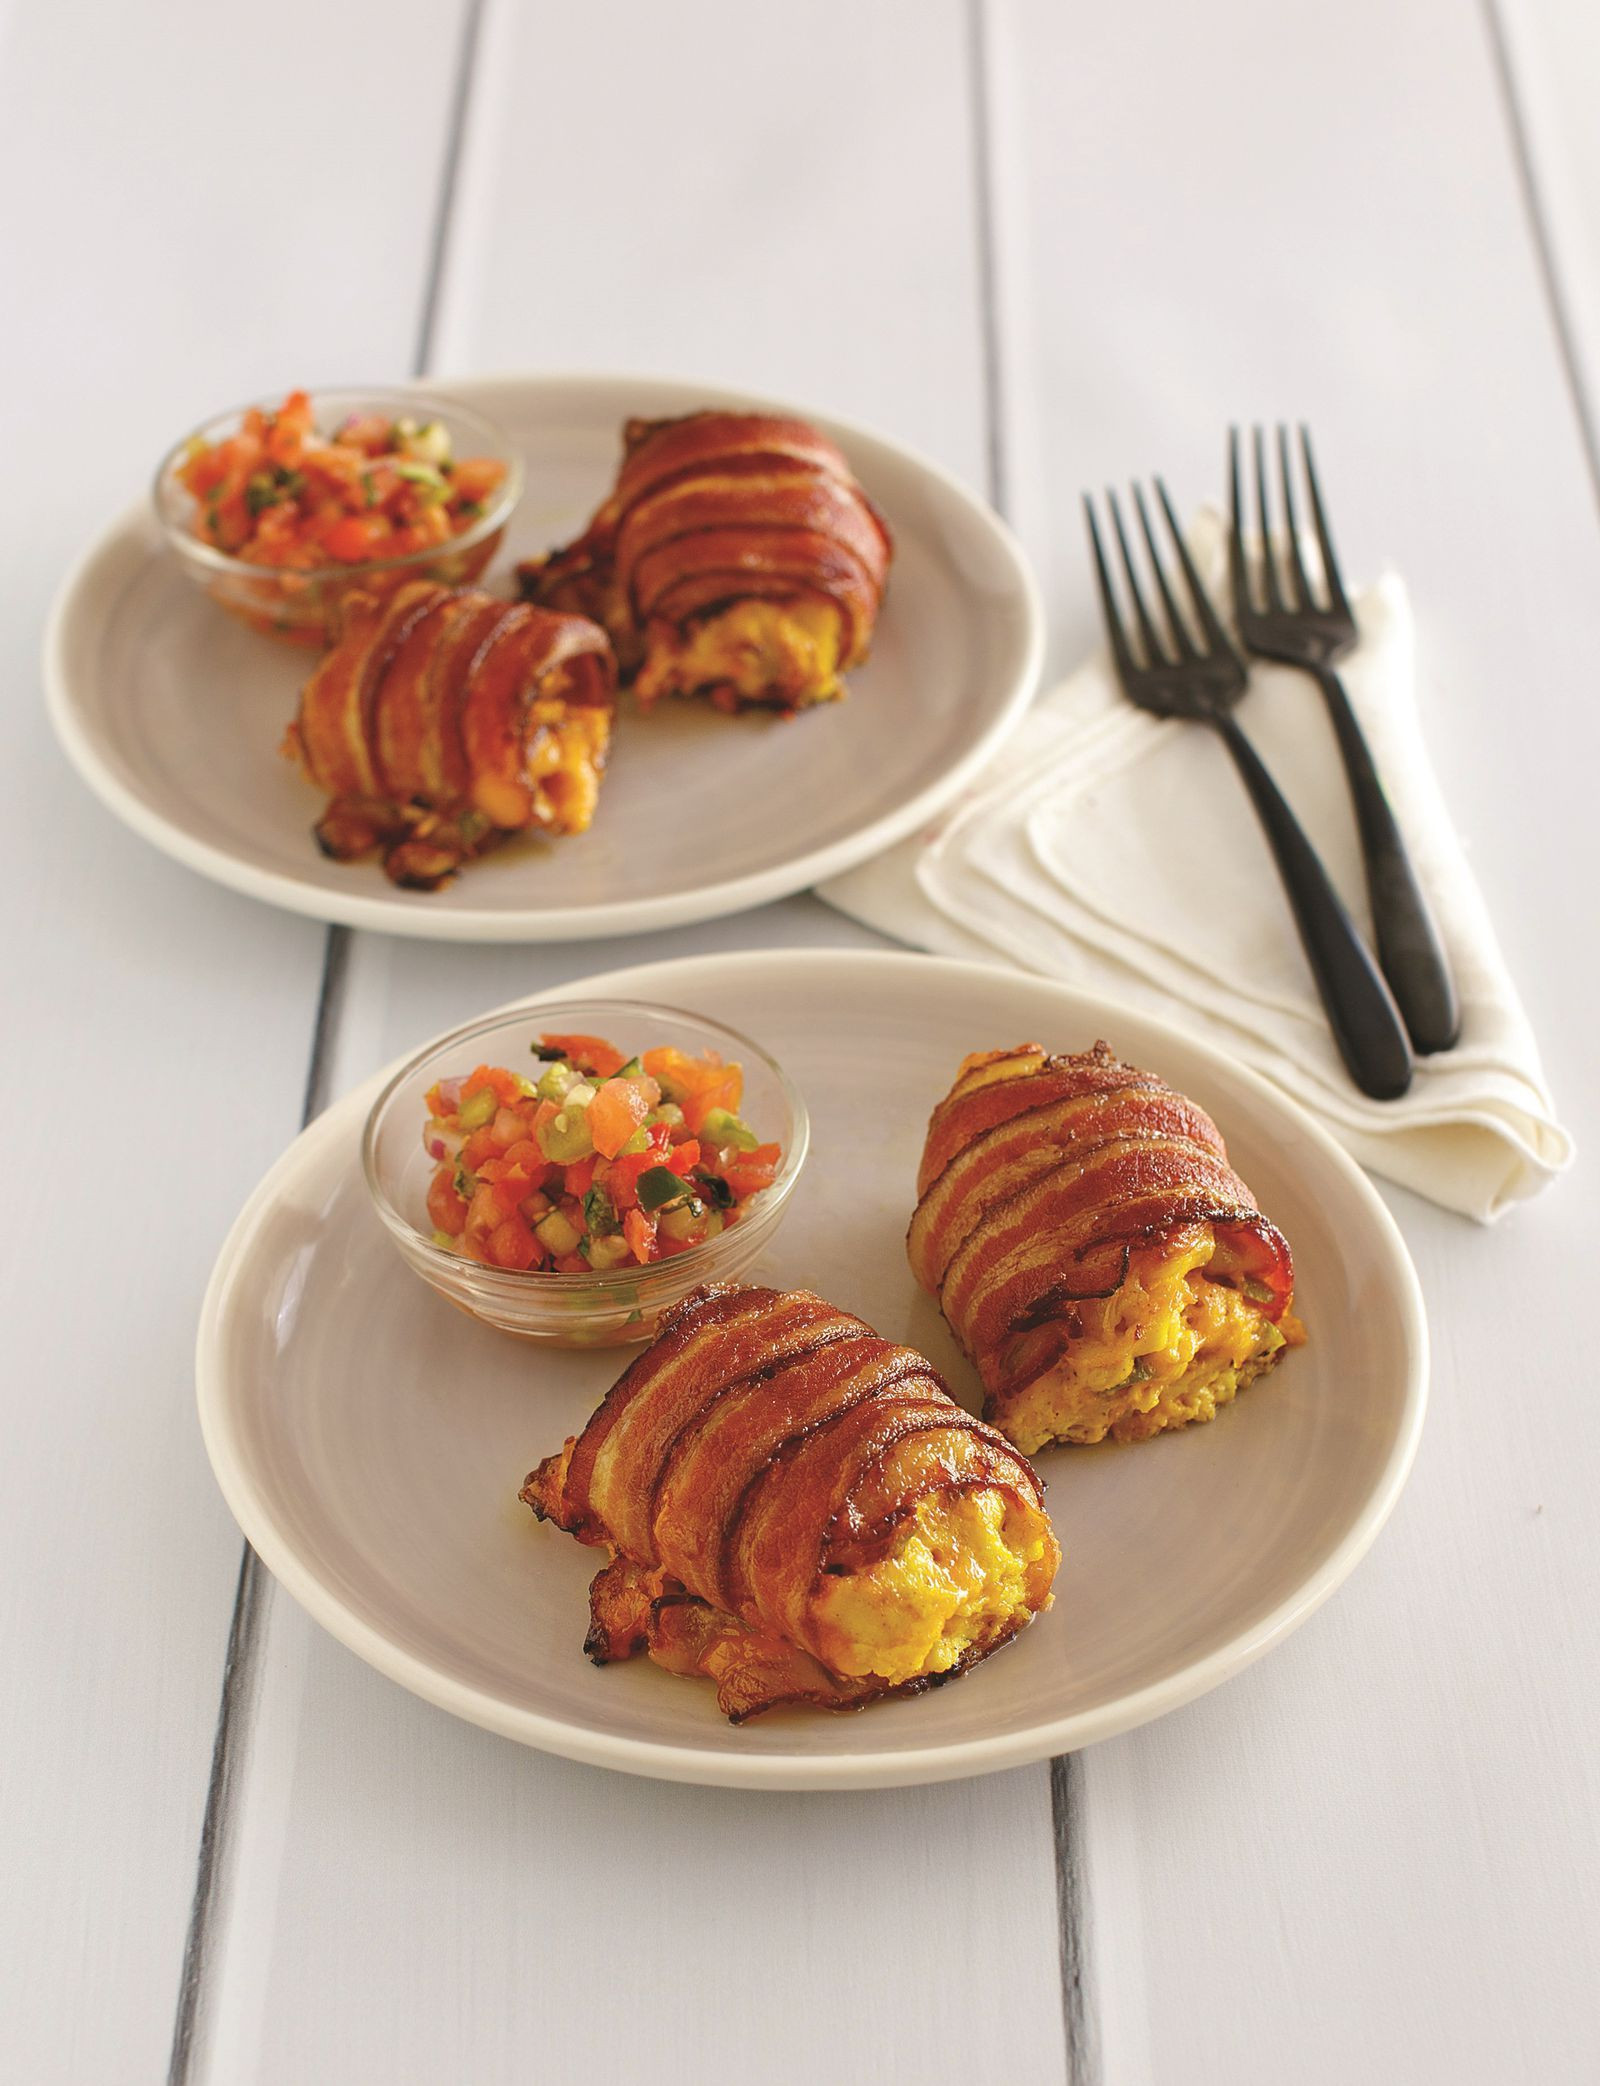 Air Fryer Keto Recipes Breakfast
 The ‘I Love My Air Fryer Keto Diet Recipe Book’ Will Make